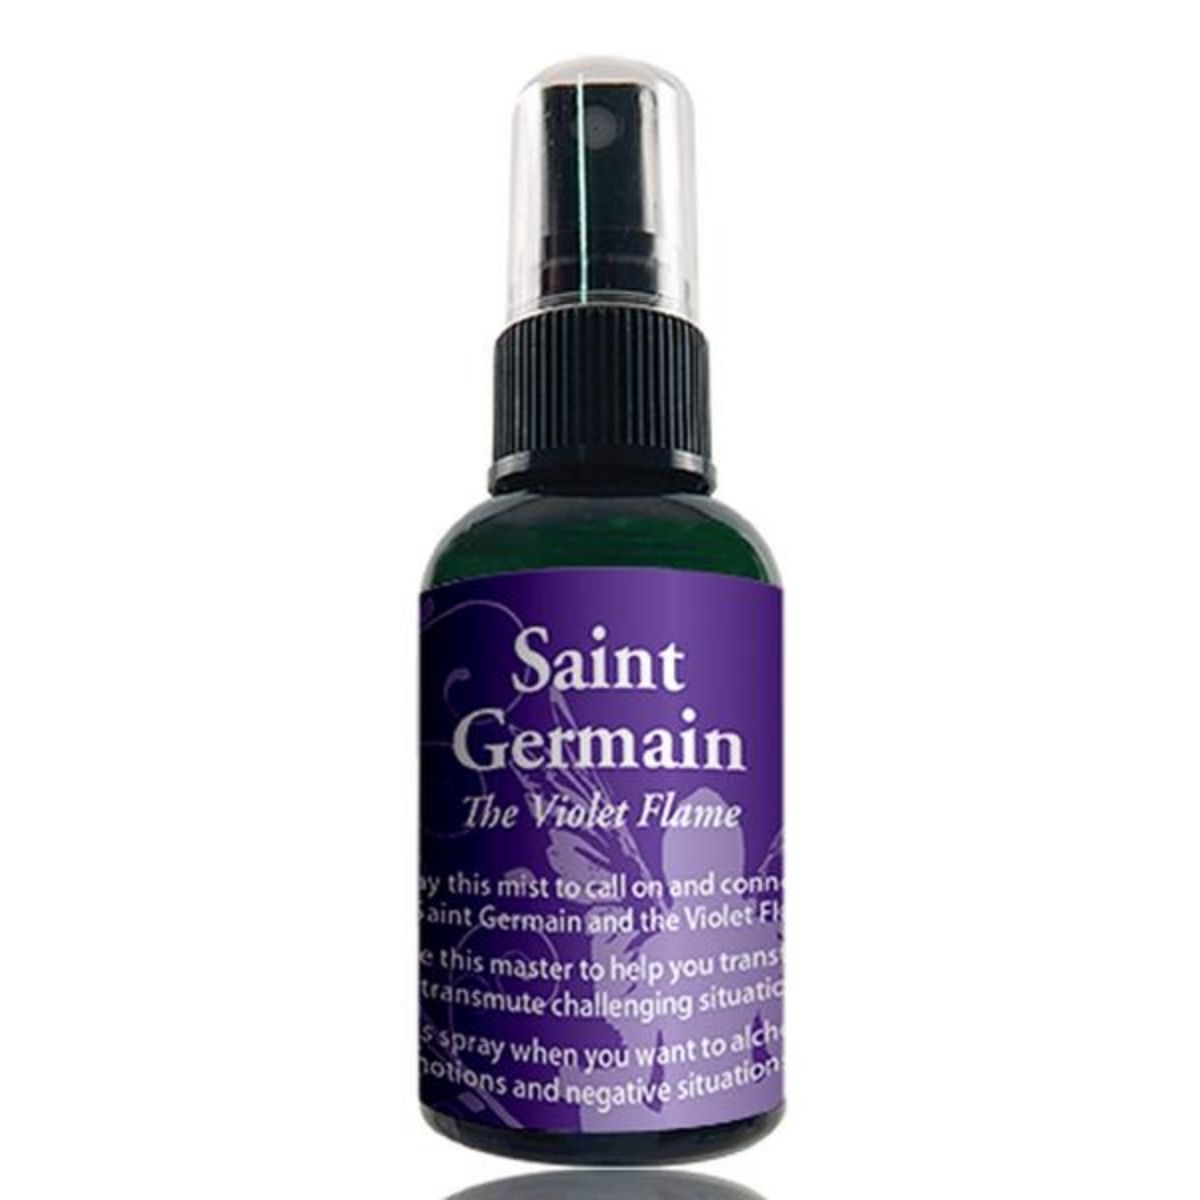 Saint Germain The Violet Flame